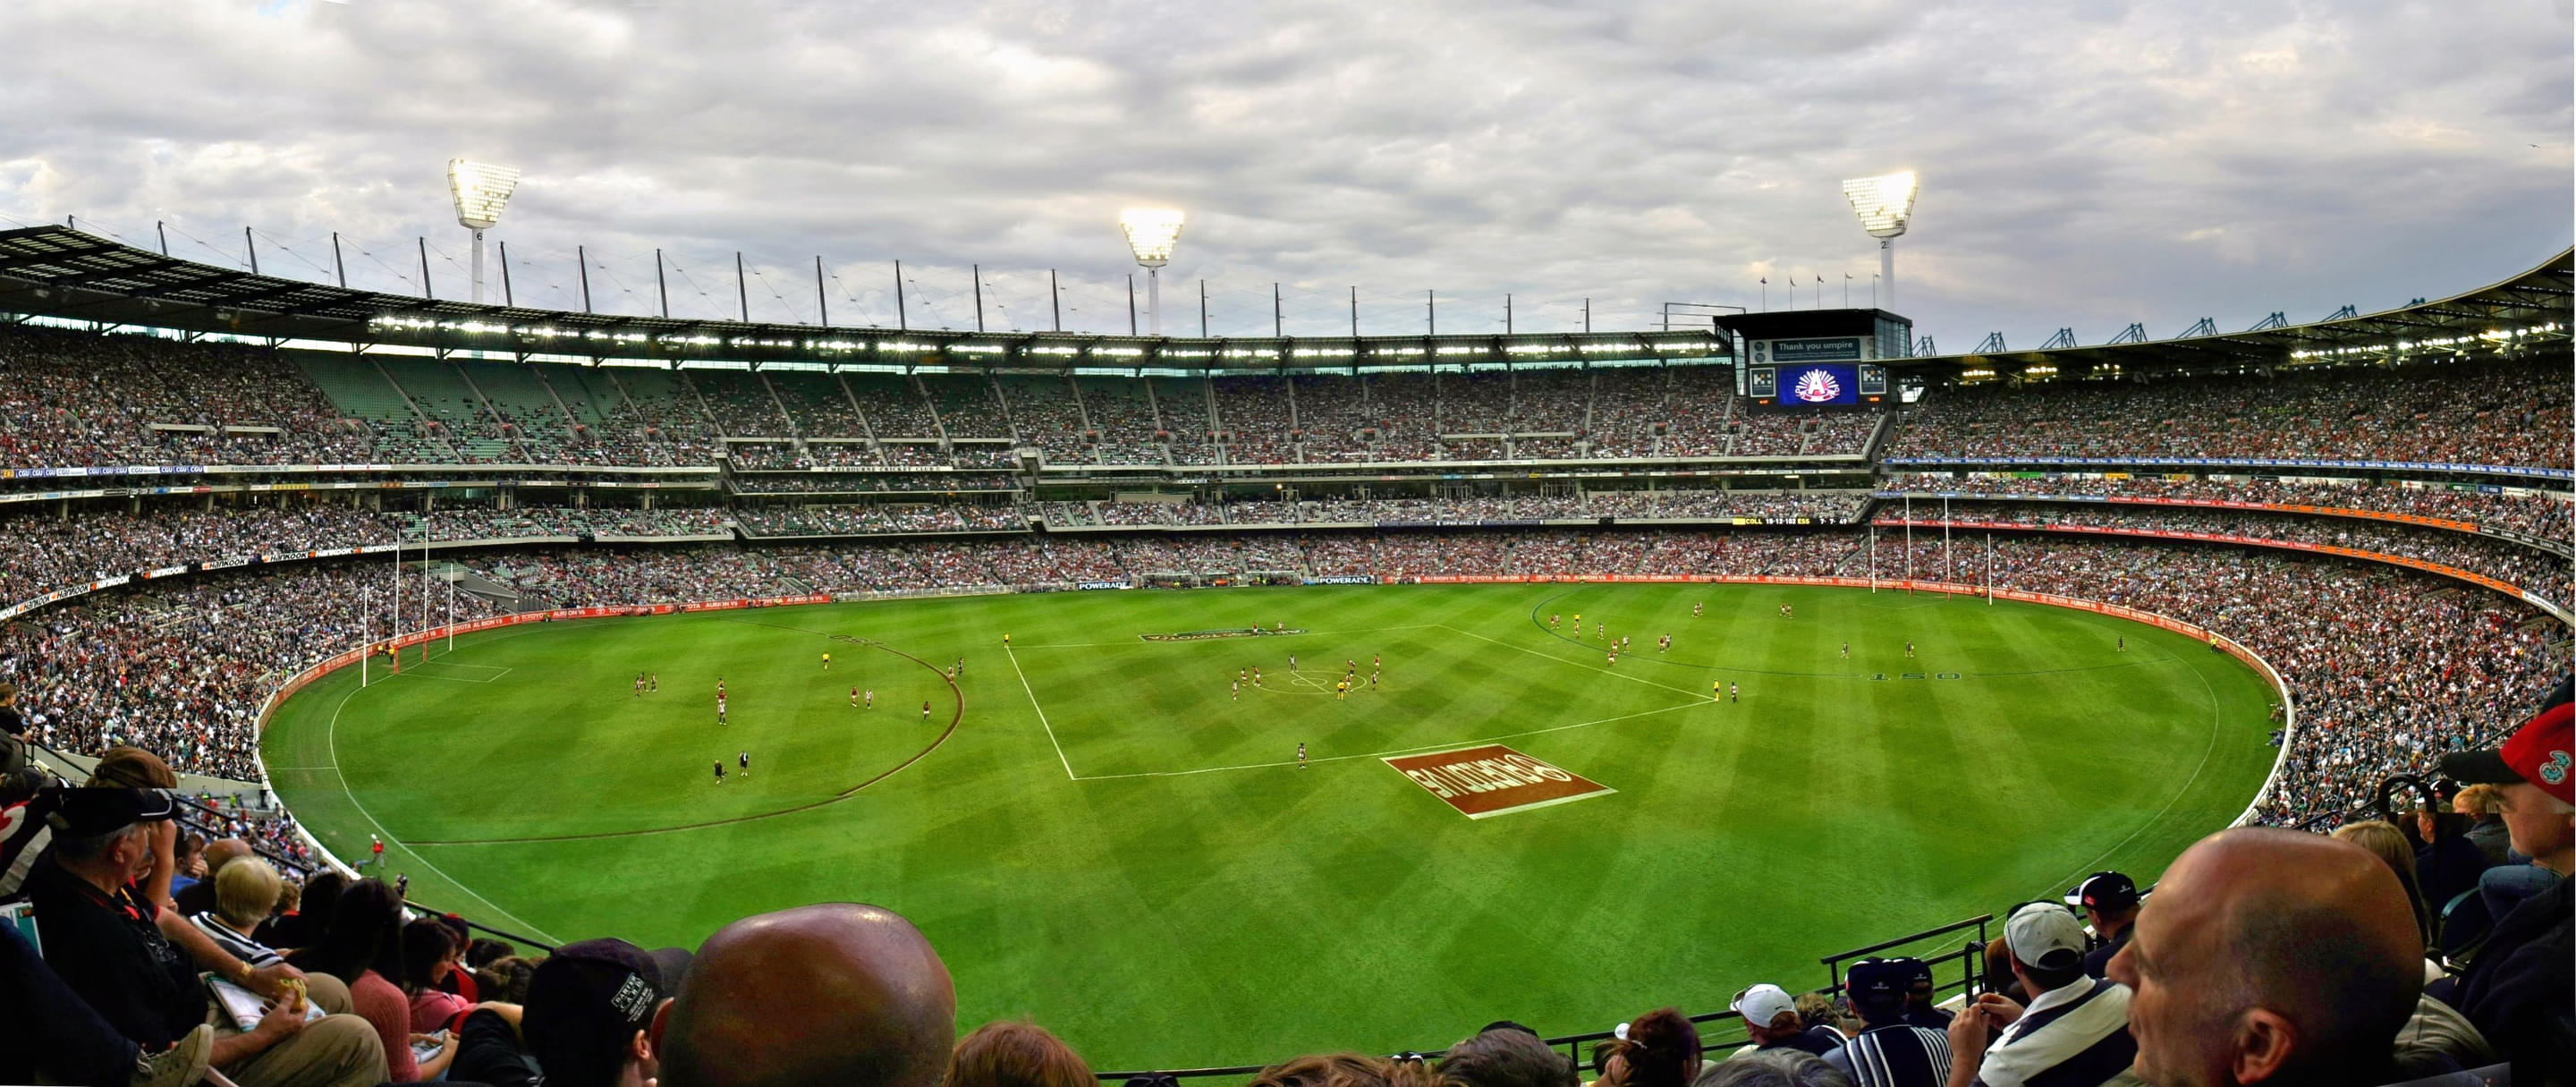 Melbourne Cricket Ground Overview